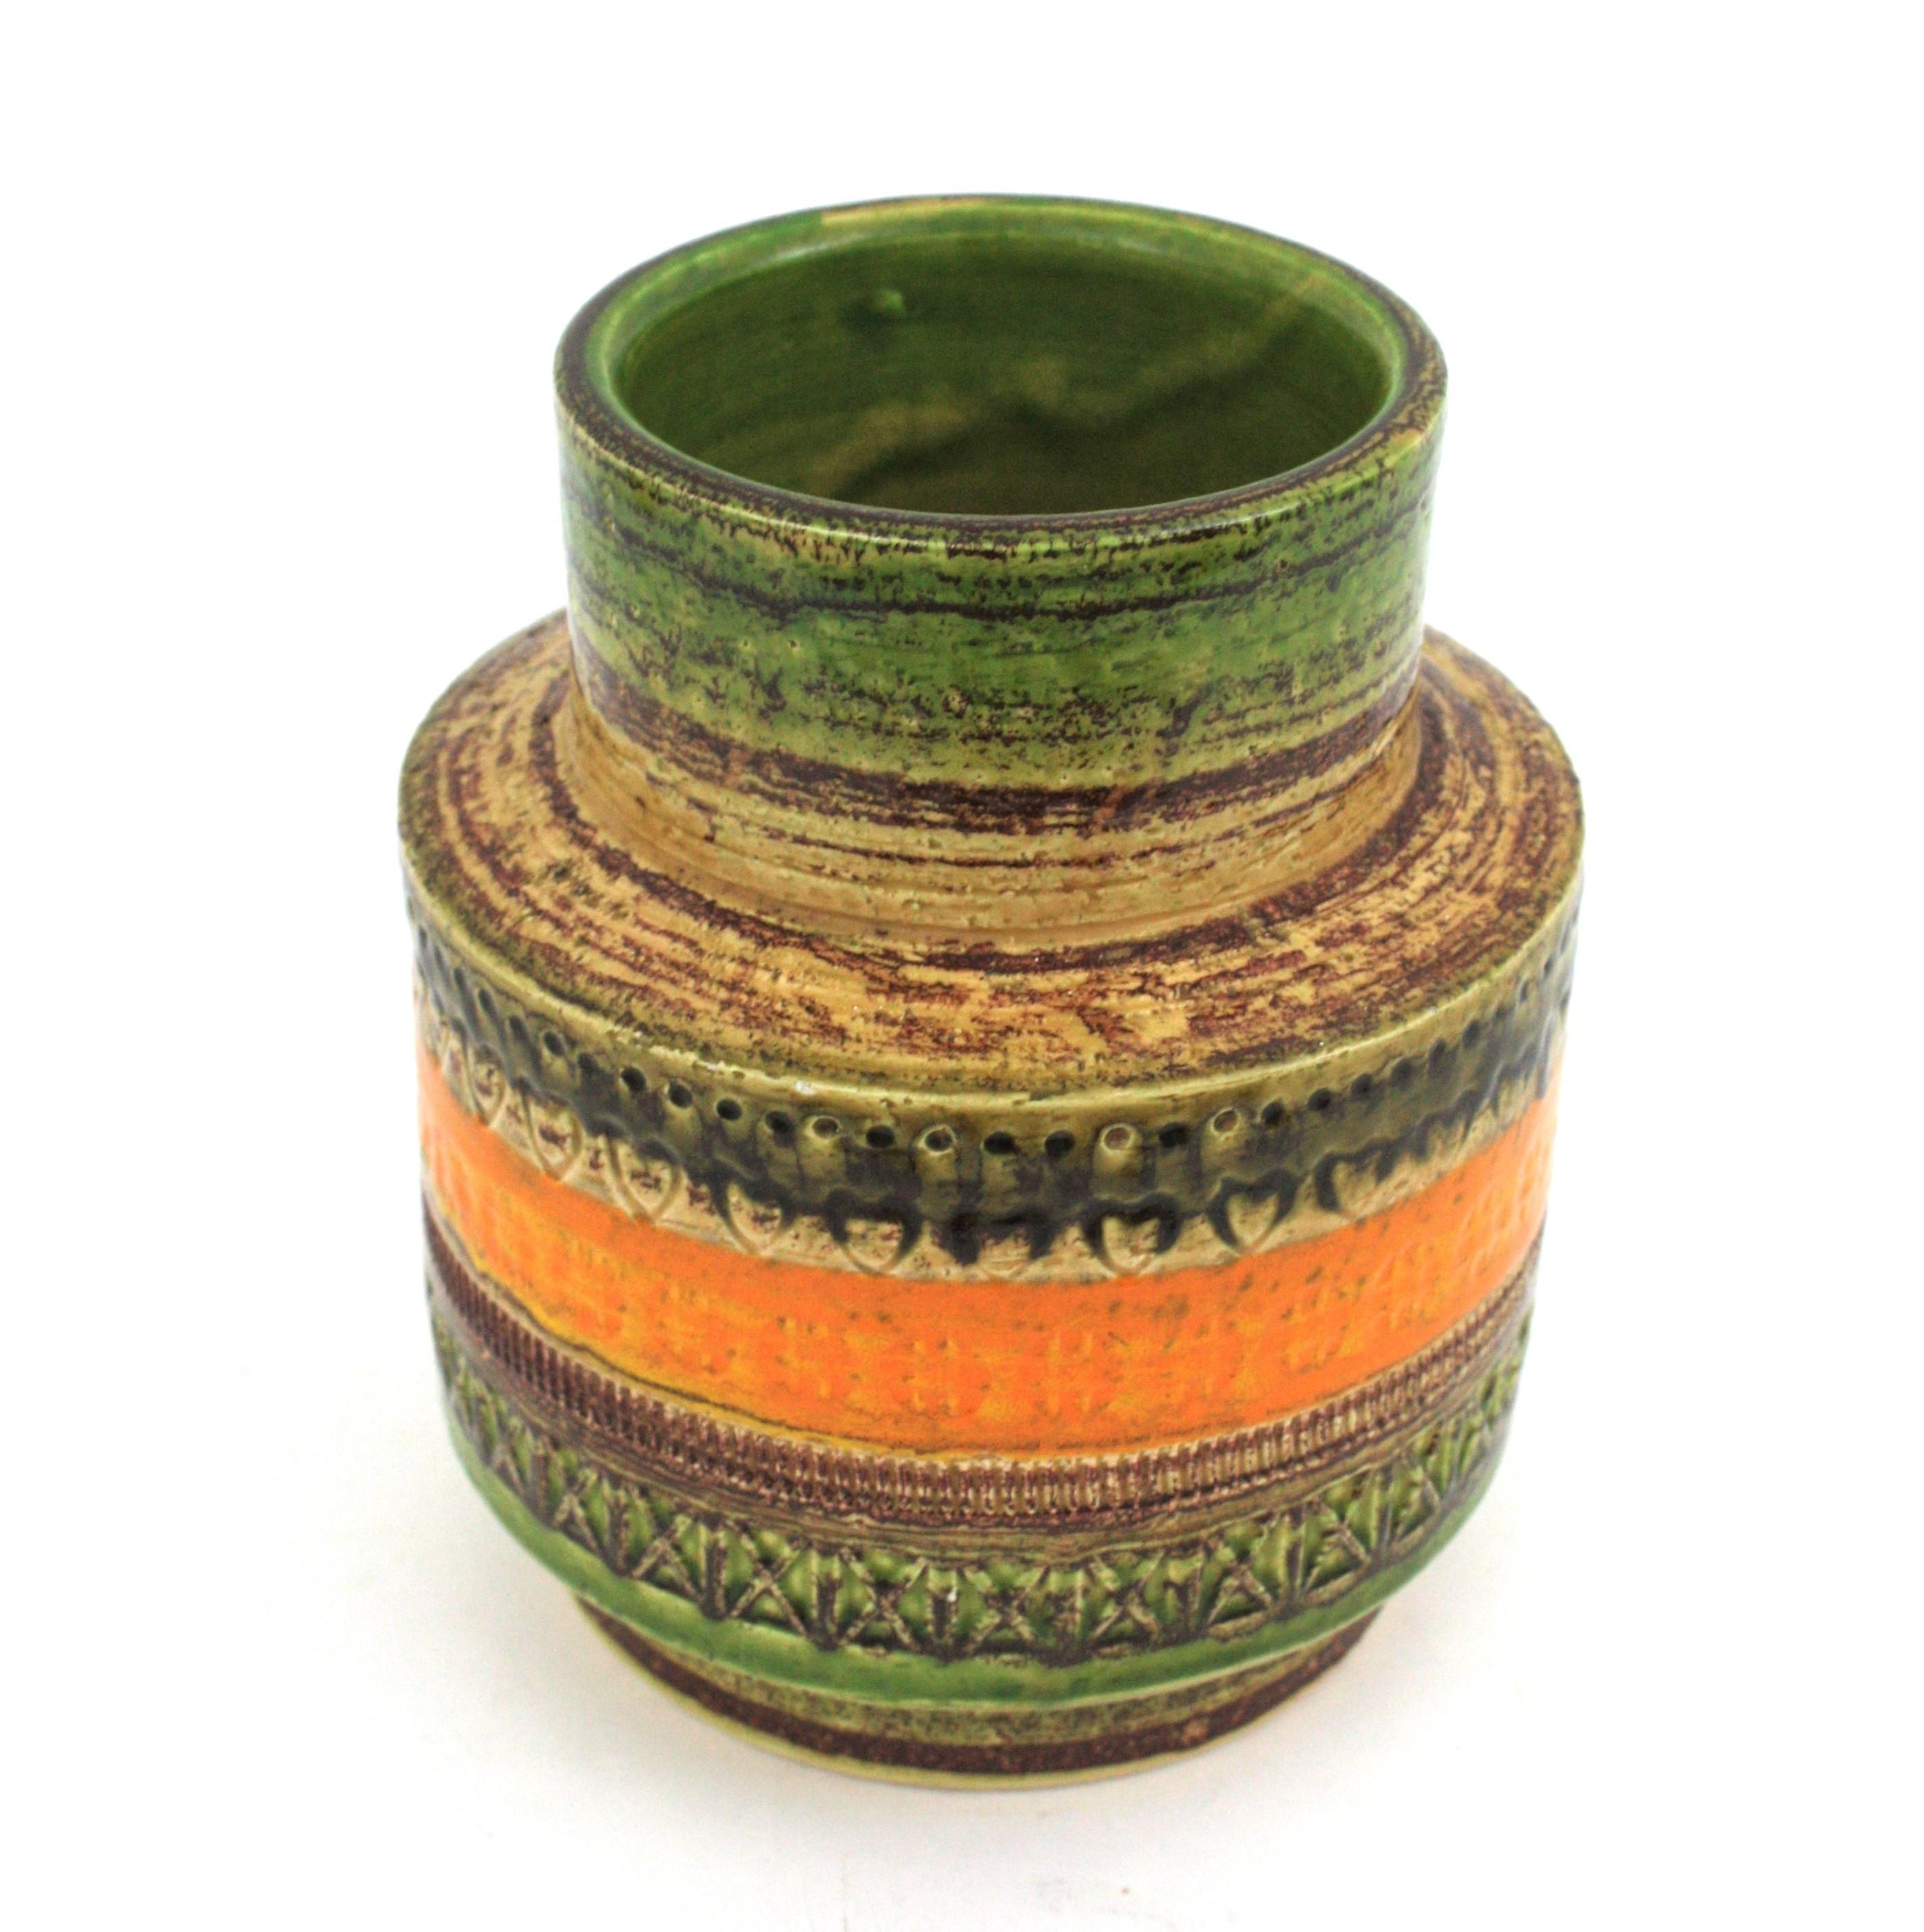 Bitossi Sahara Aldo Londi Cer Paoli glasierte Keramikvasen, Italien, 1960er Jahre (Glasiert) im Angebot